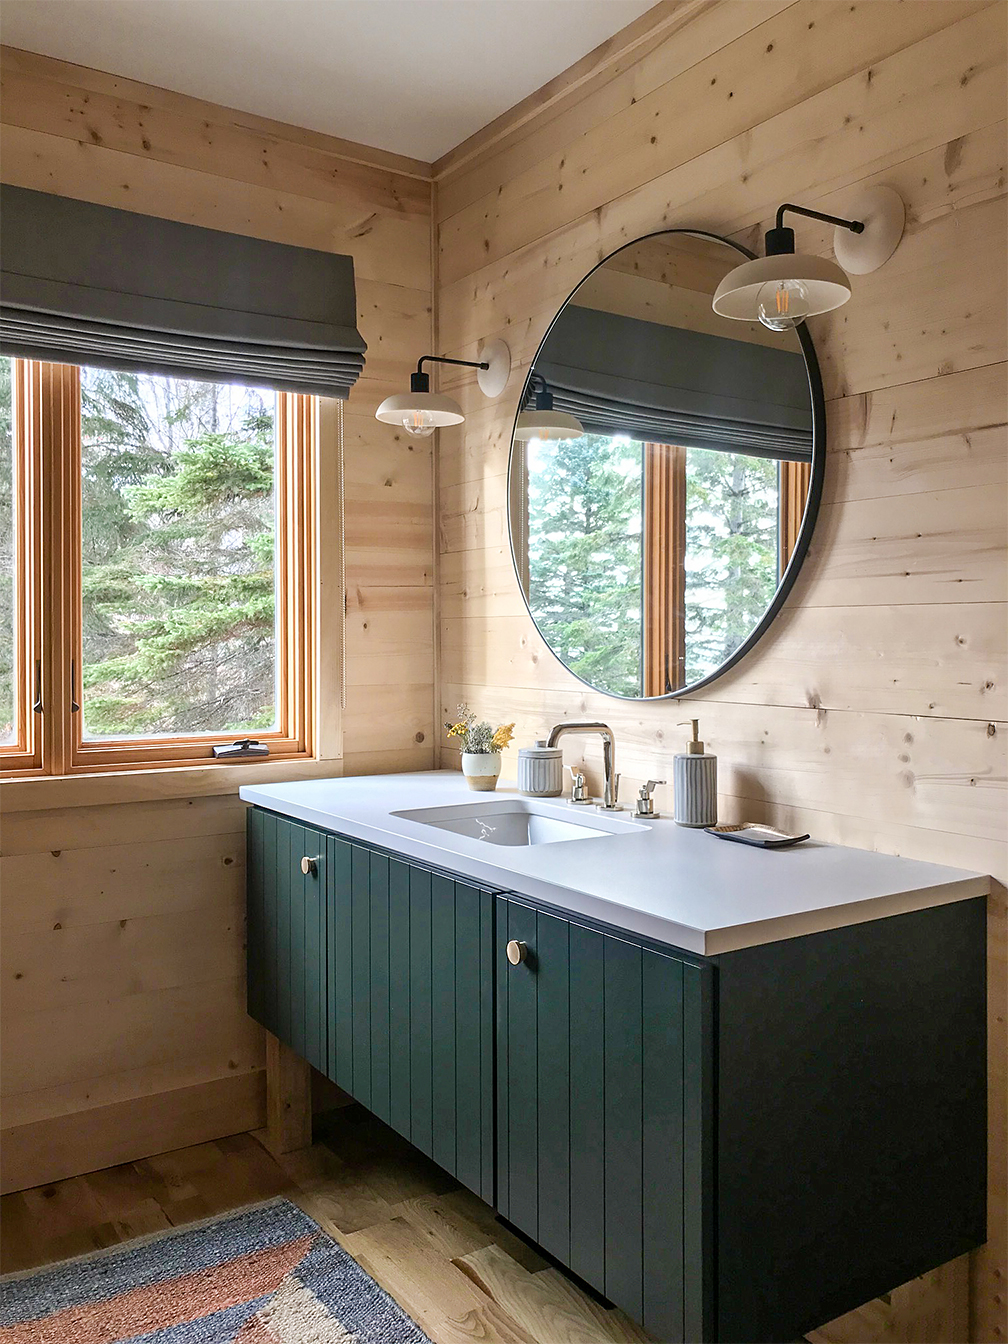 wood-paneled bathroom with green vanity